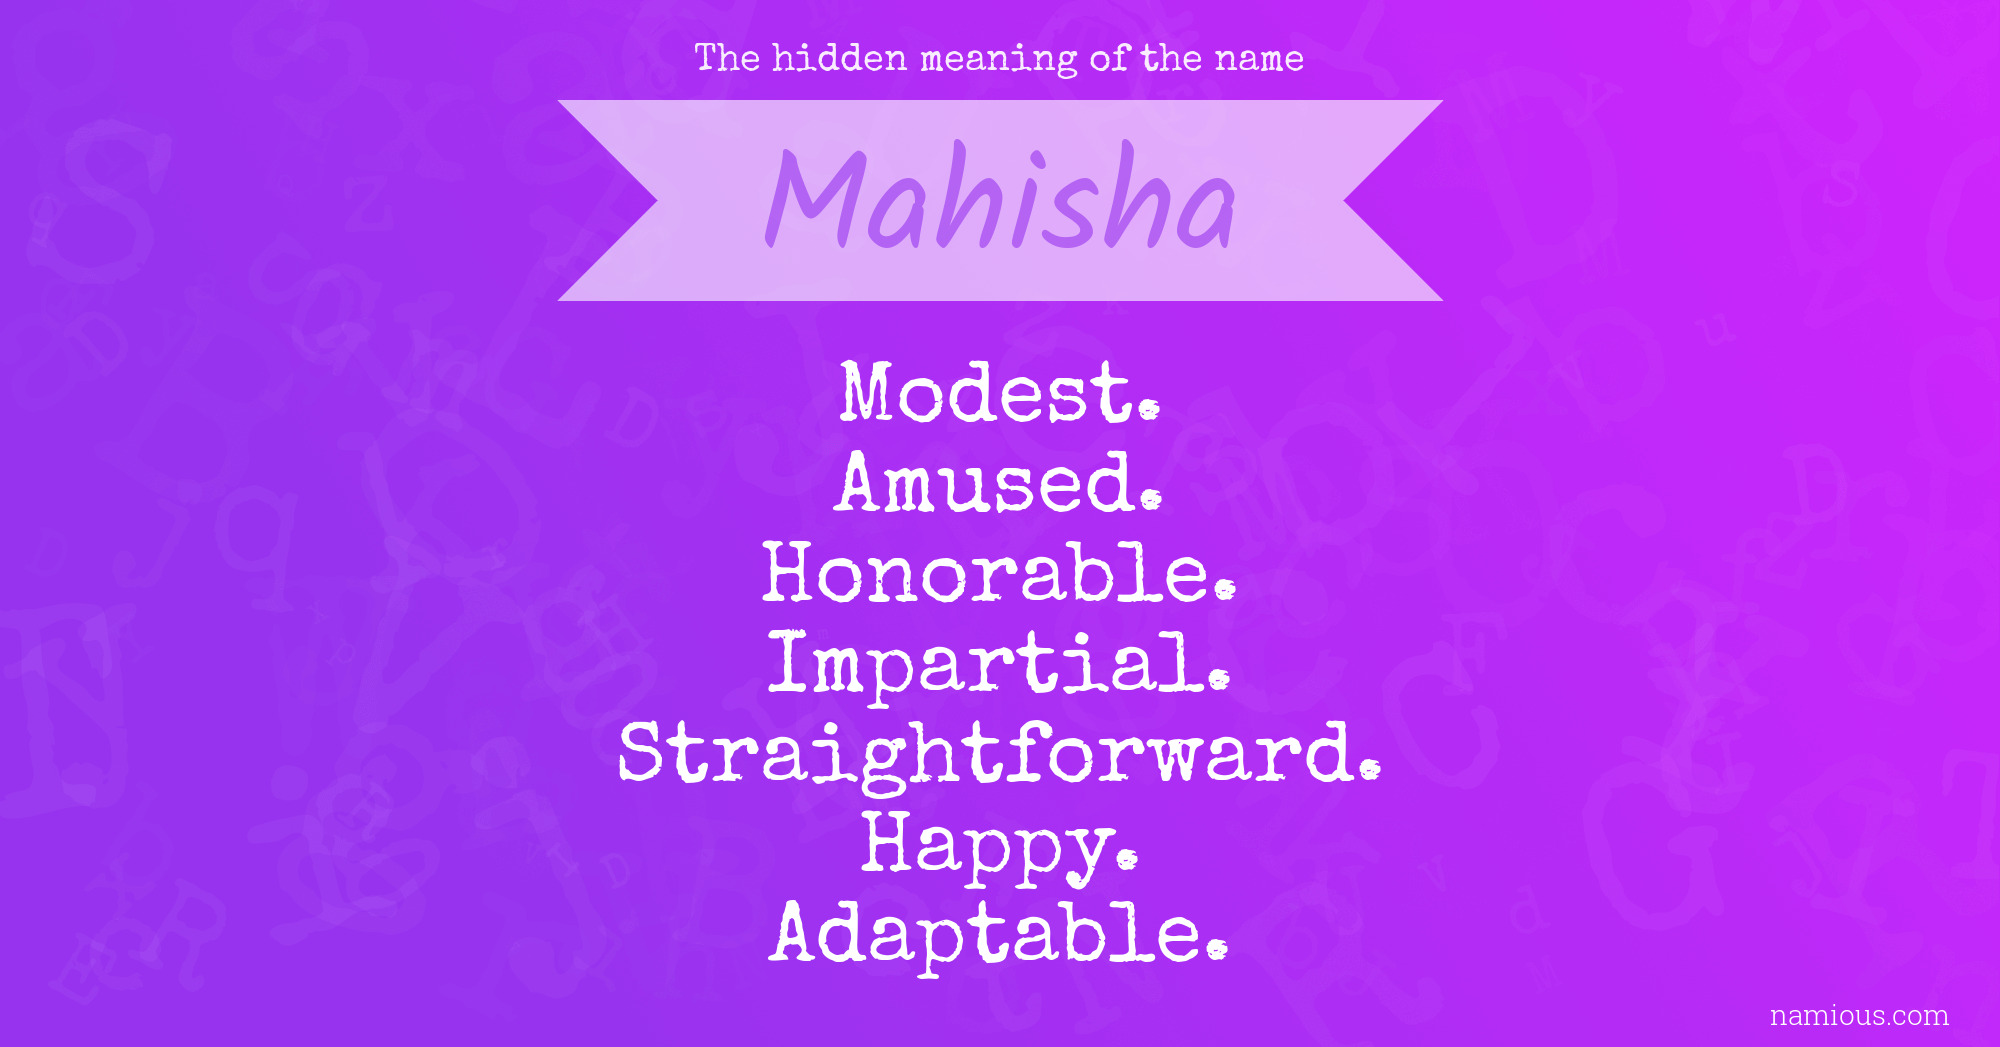 The hidden meaning of the name Mahisha